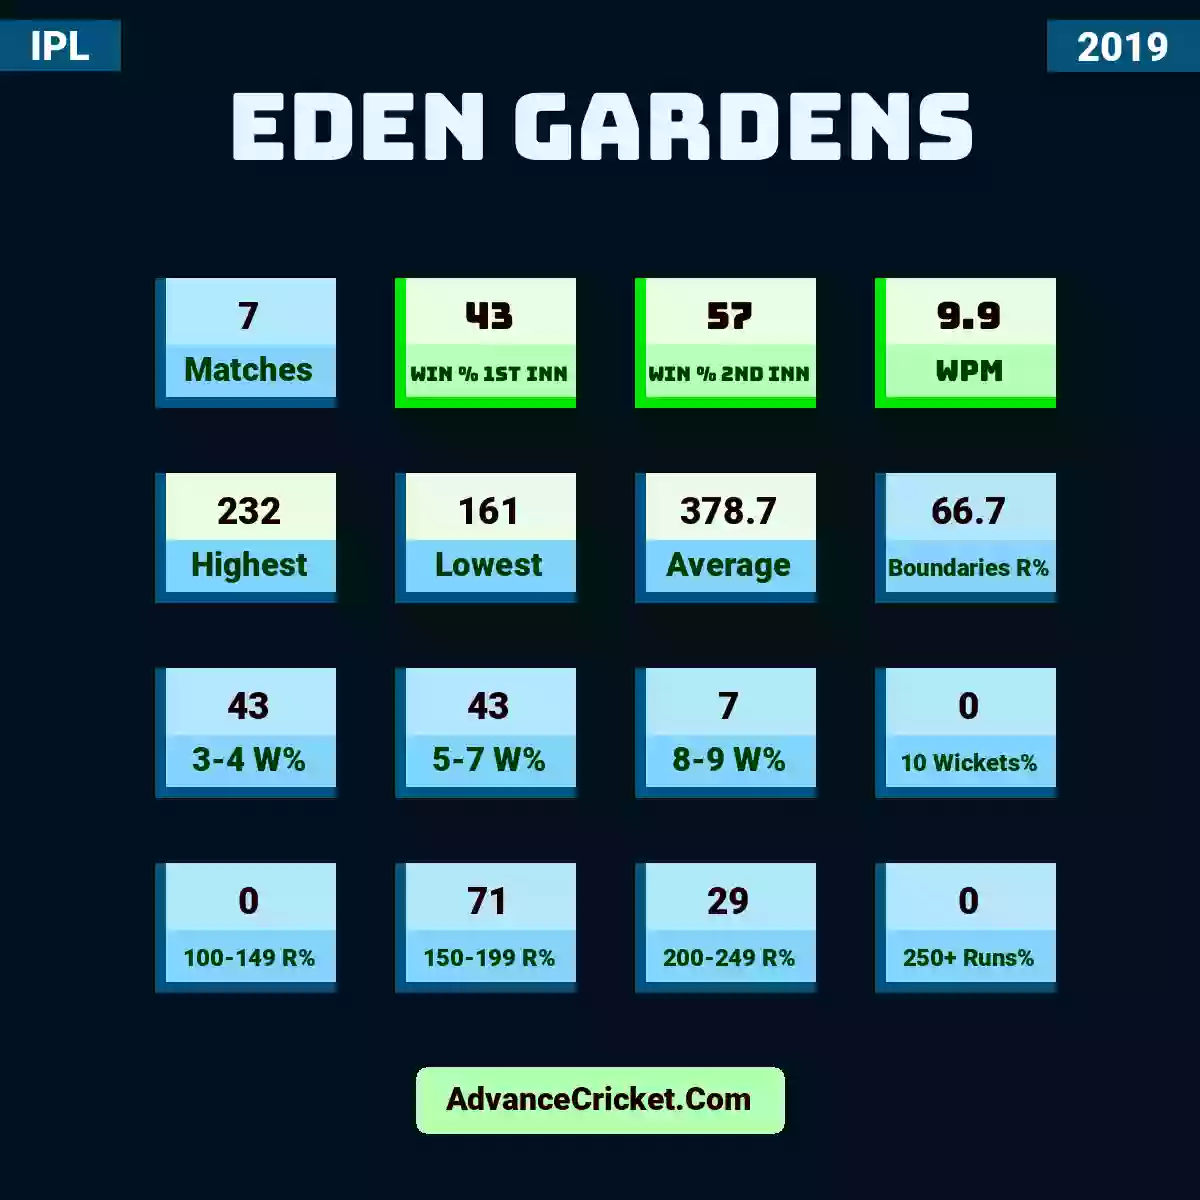 Image showing Eden Gardens with Matches: 7, Win % 1st Inn: 43, Win % 2nd Inn: 57, WPM: 9.9, Highest: 232, Lowest: 161, Average: 378.7, Boundaries R%: 66.7, 3-4 W%: 43, 5-7 W%: 43, 8-9 W%: 7, 10 Wickets%: 0, 100-149 R%: 0, 150-199 R%: 71, 200-249 R%: 29, 250+ Runs%: 0.